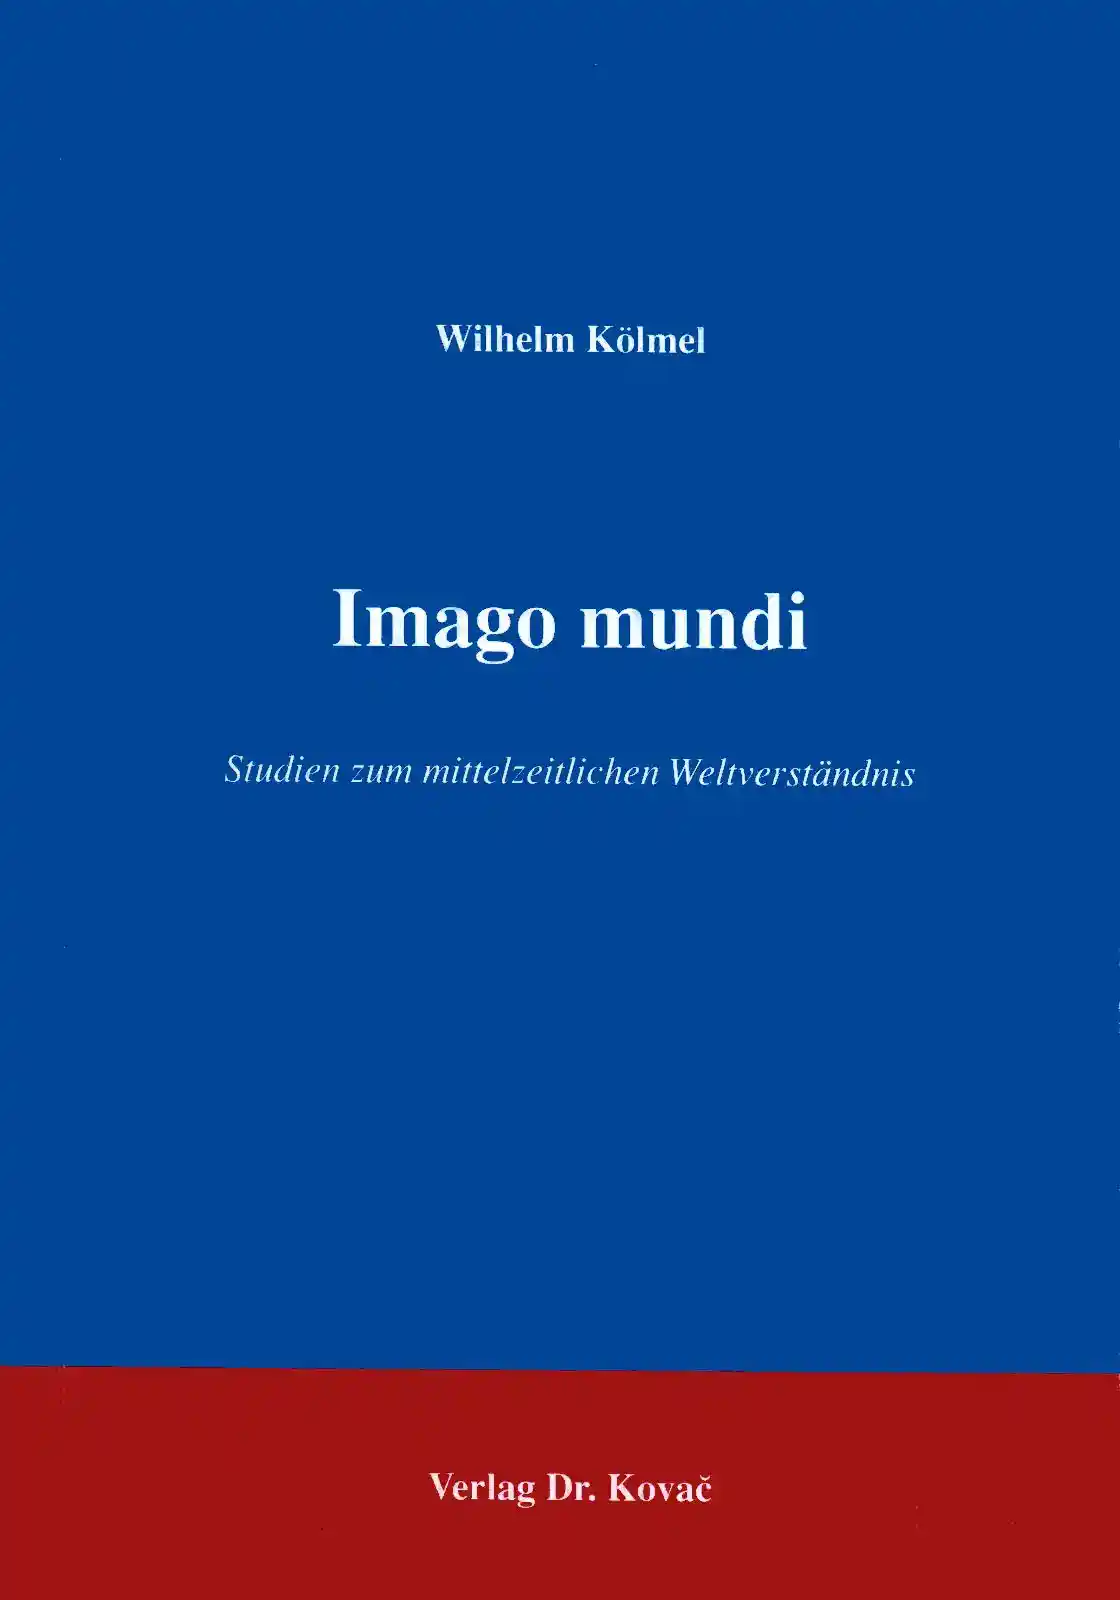 Imago mundi (Forschungsarbeit)